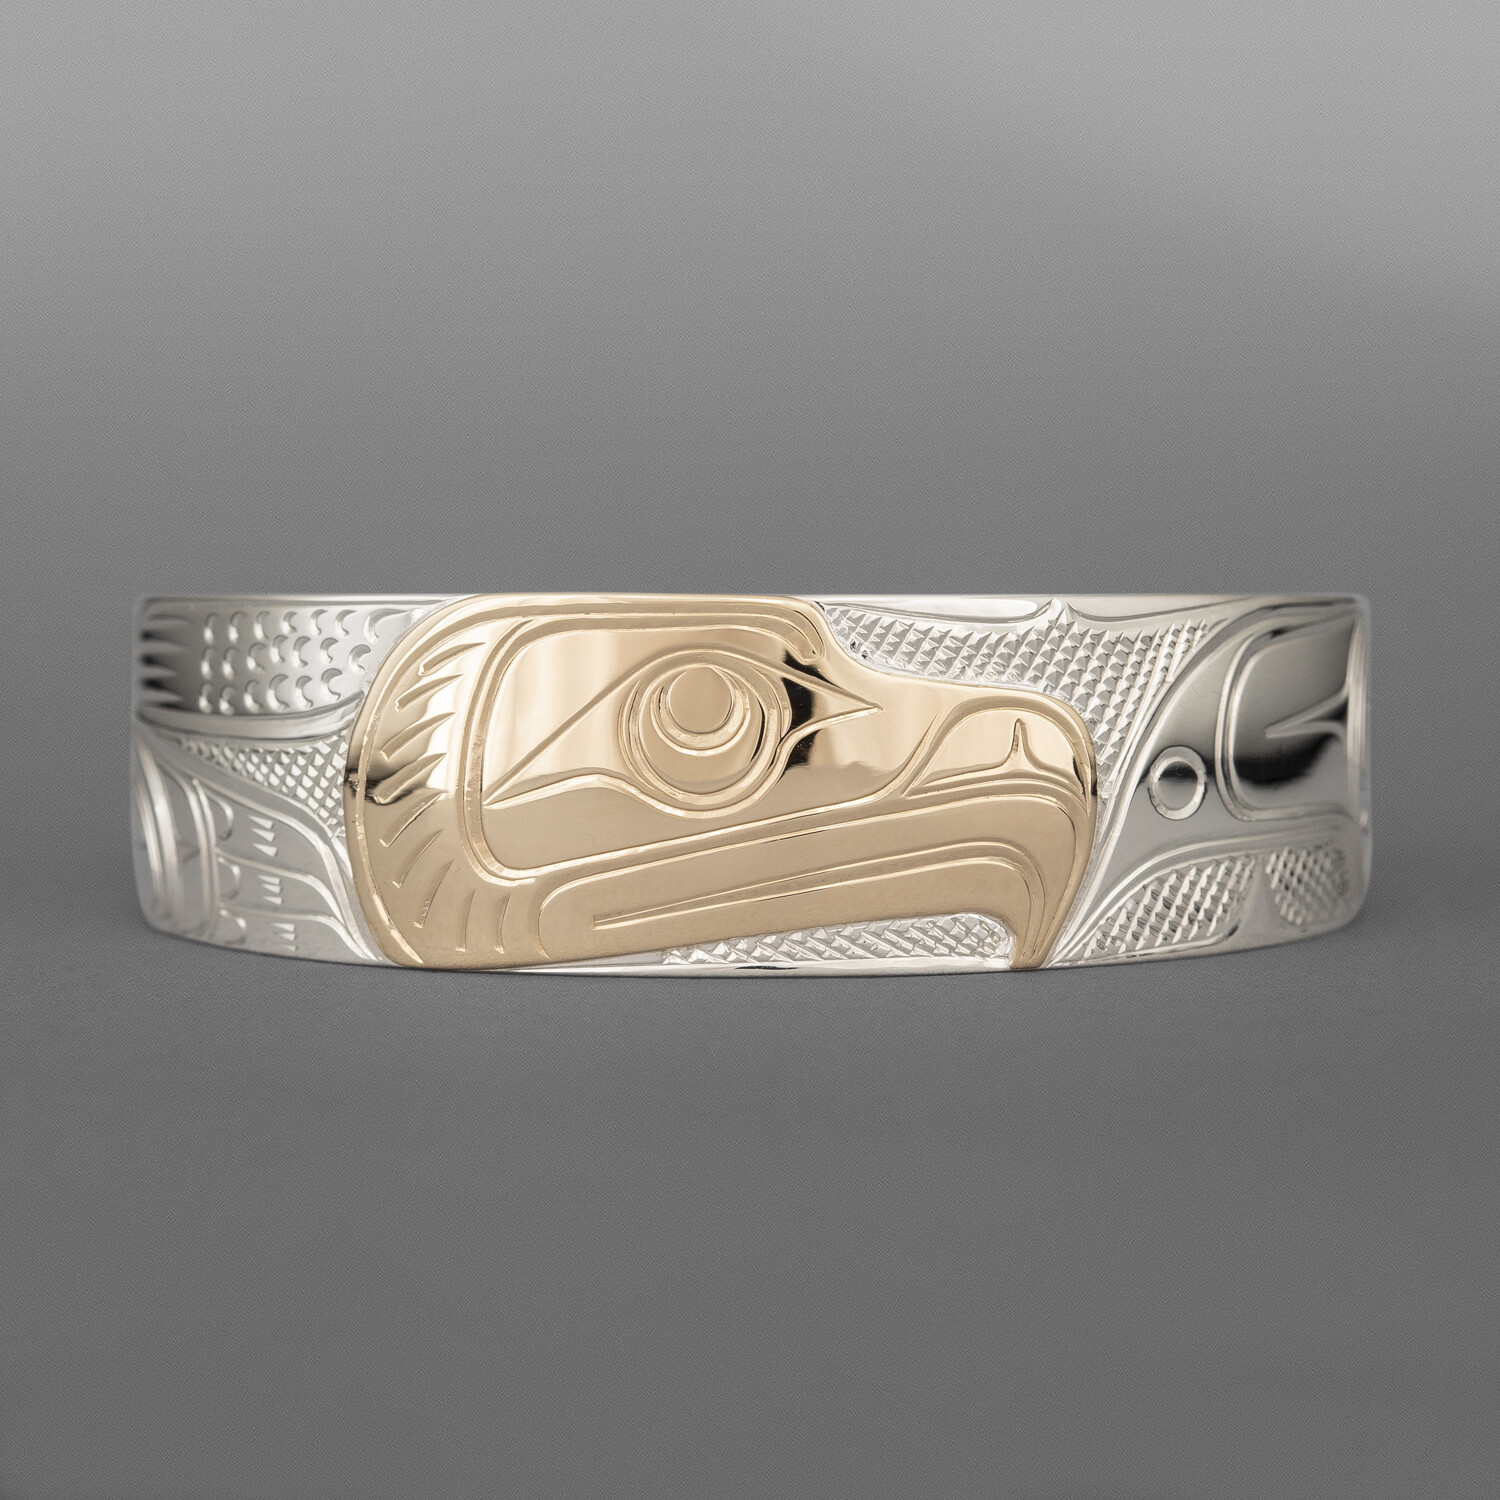 Eagle Bracelet
Lloyd Wadhams Jr
Kwakwaka'wakw
Silver, 14k gold
6" x ¾”
$1100